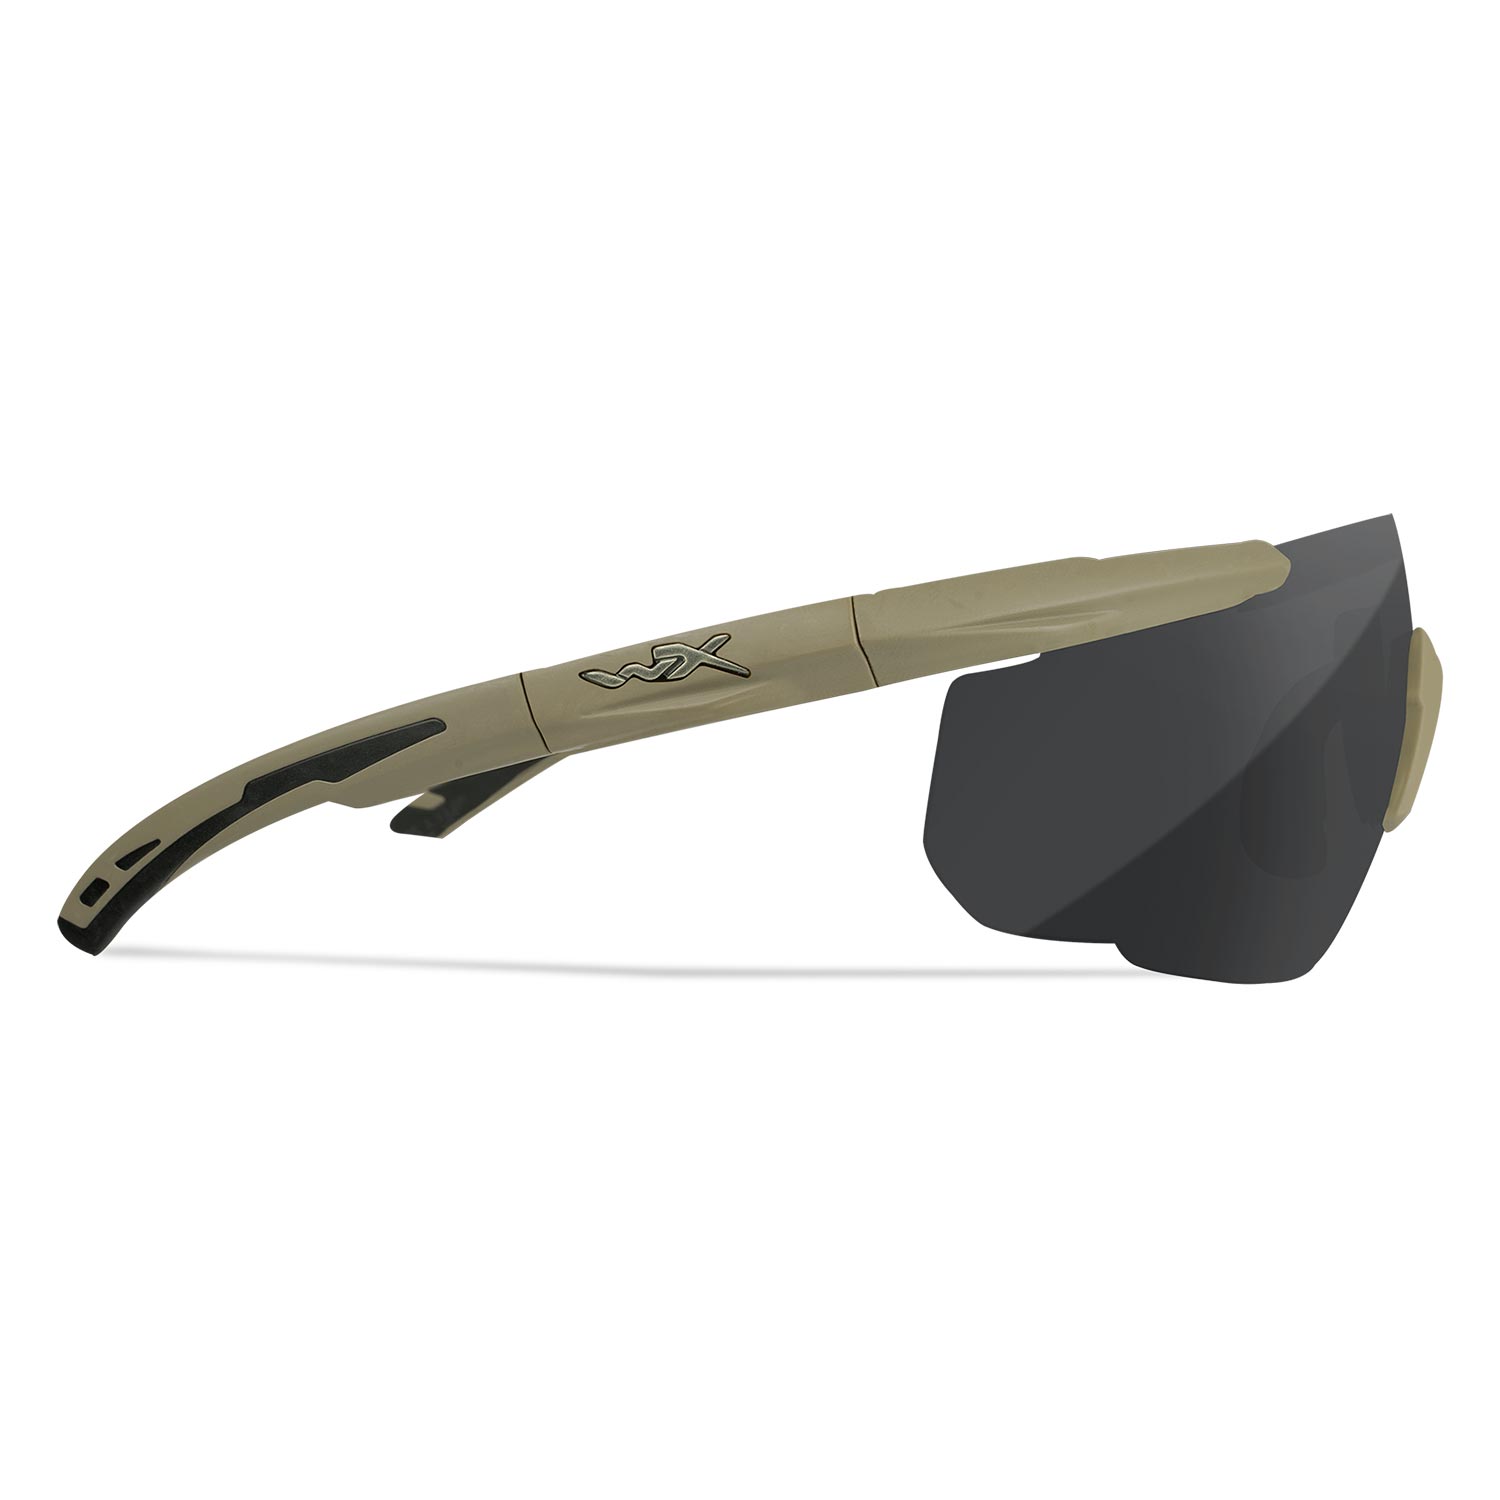 Wiley X Saber Advanced 3 Lens Array Sunglasses w/ Matte Tan